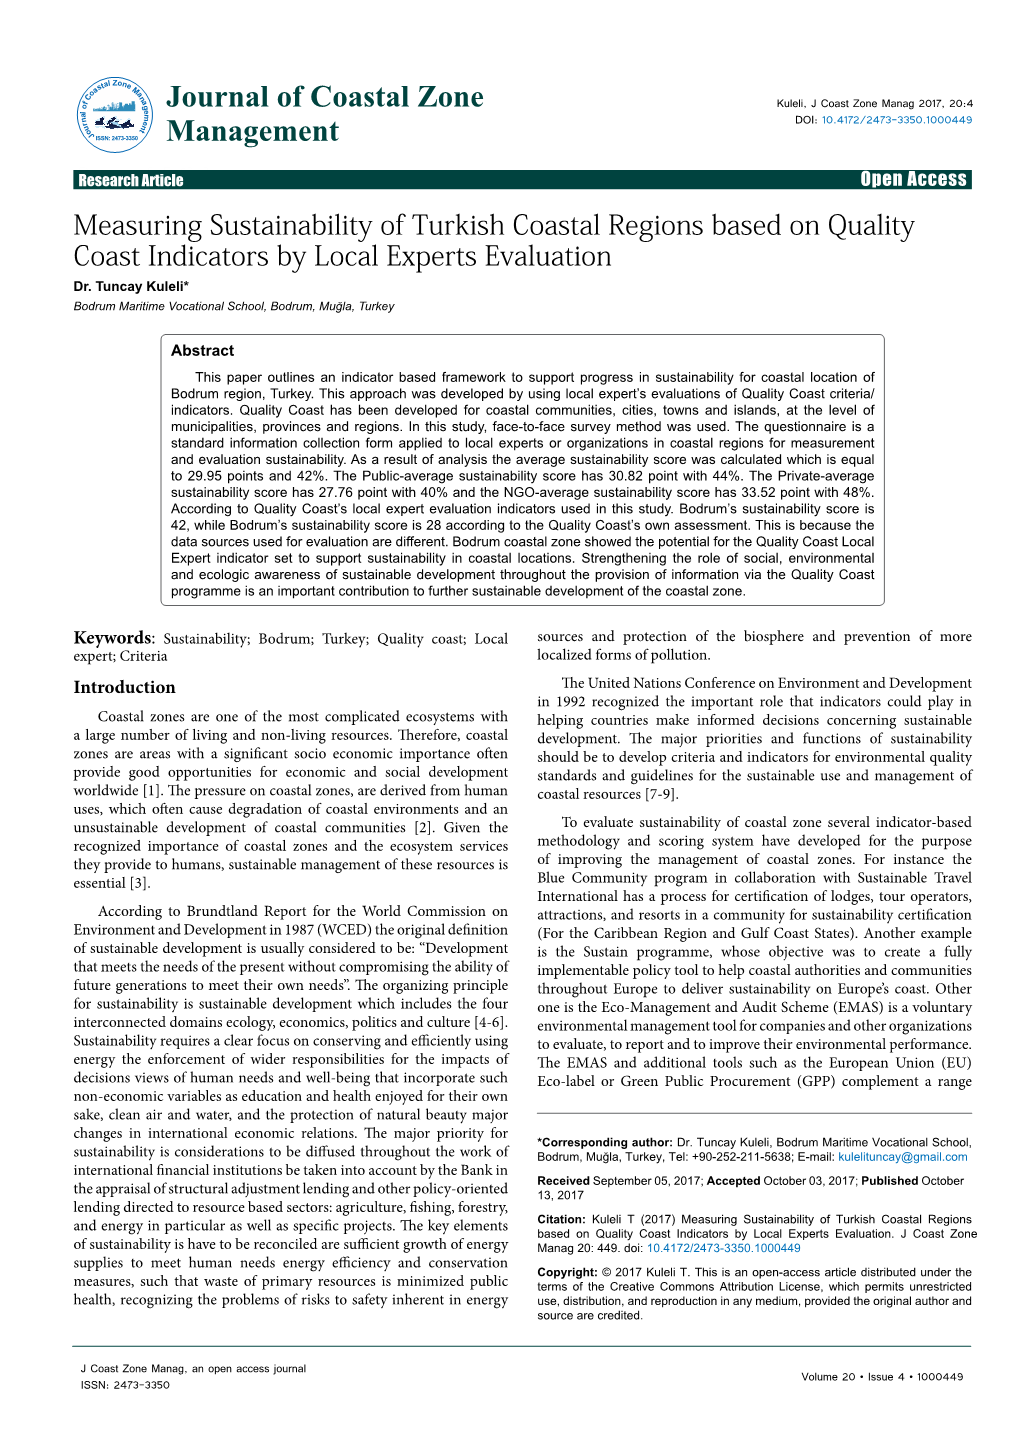 Measuring Sustainability of Turkish Coastal Regions Based on Quality Coast Indicators by Local Experts Evaluation Dr